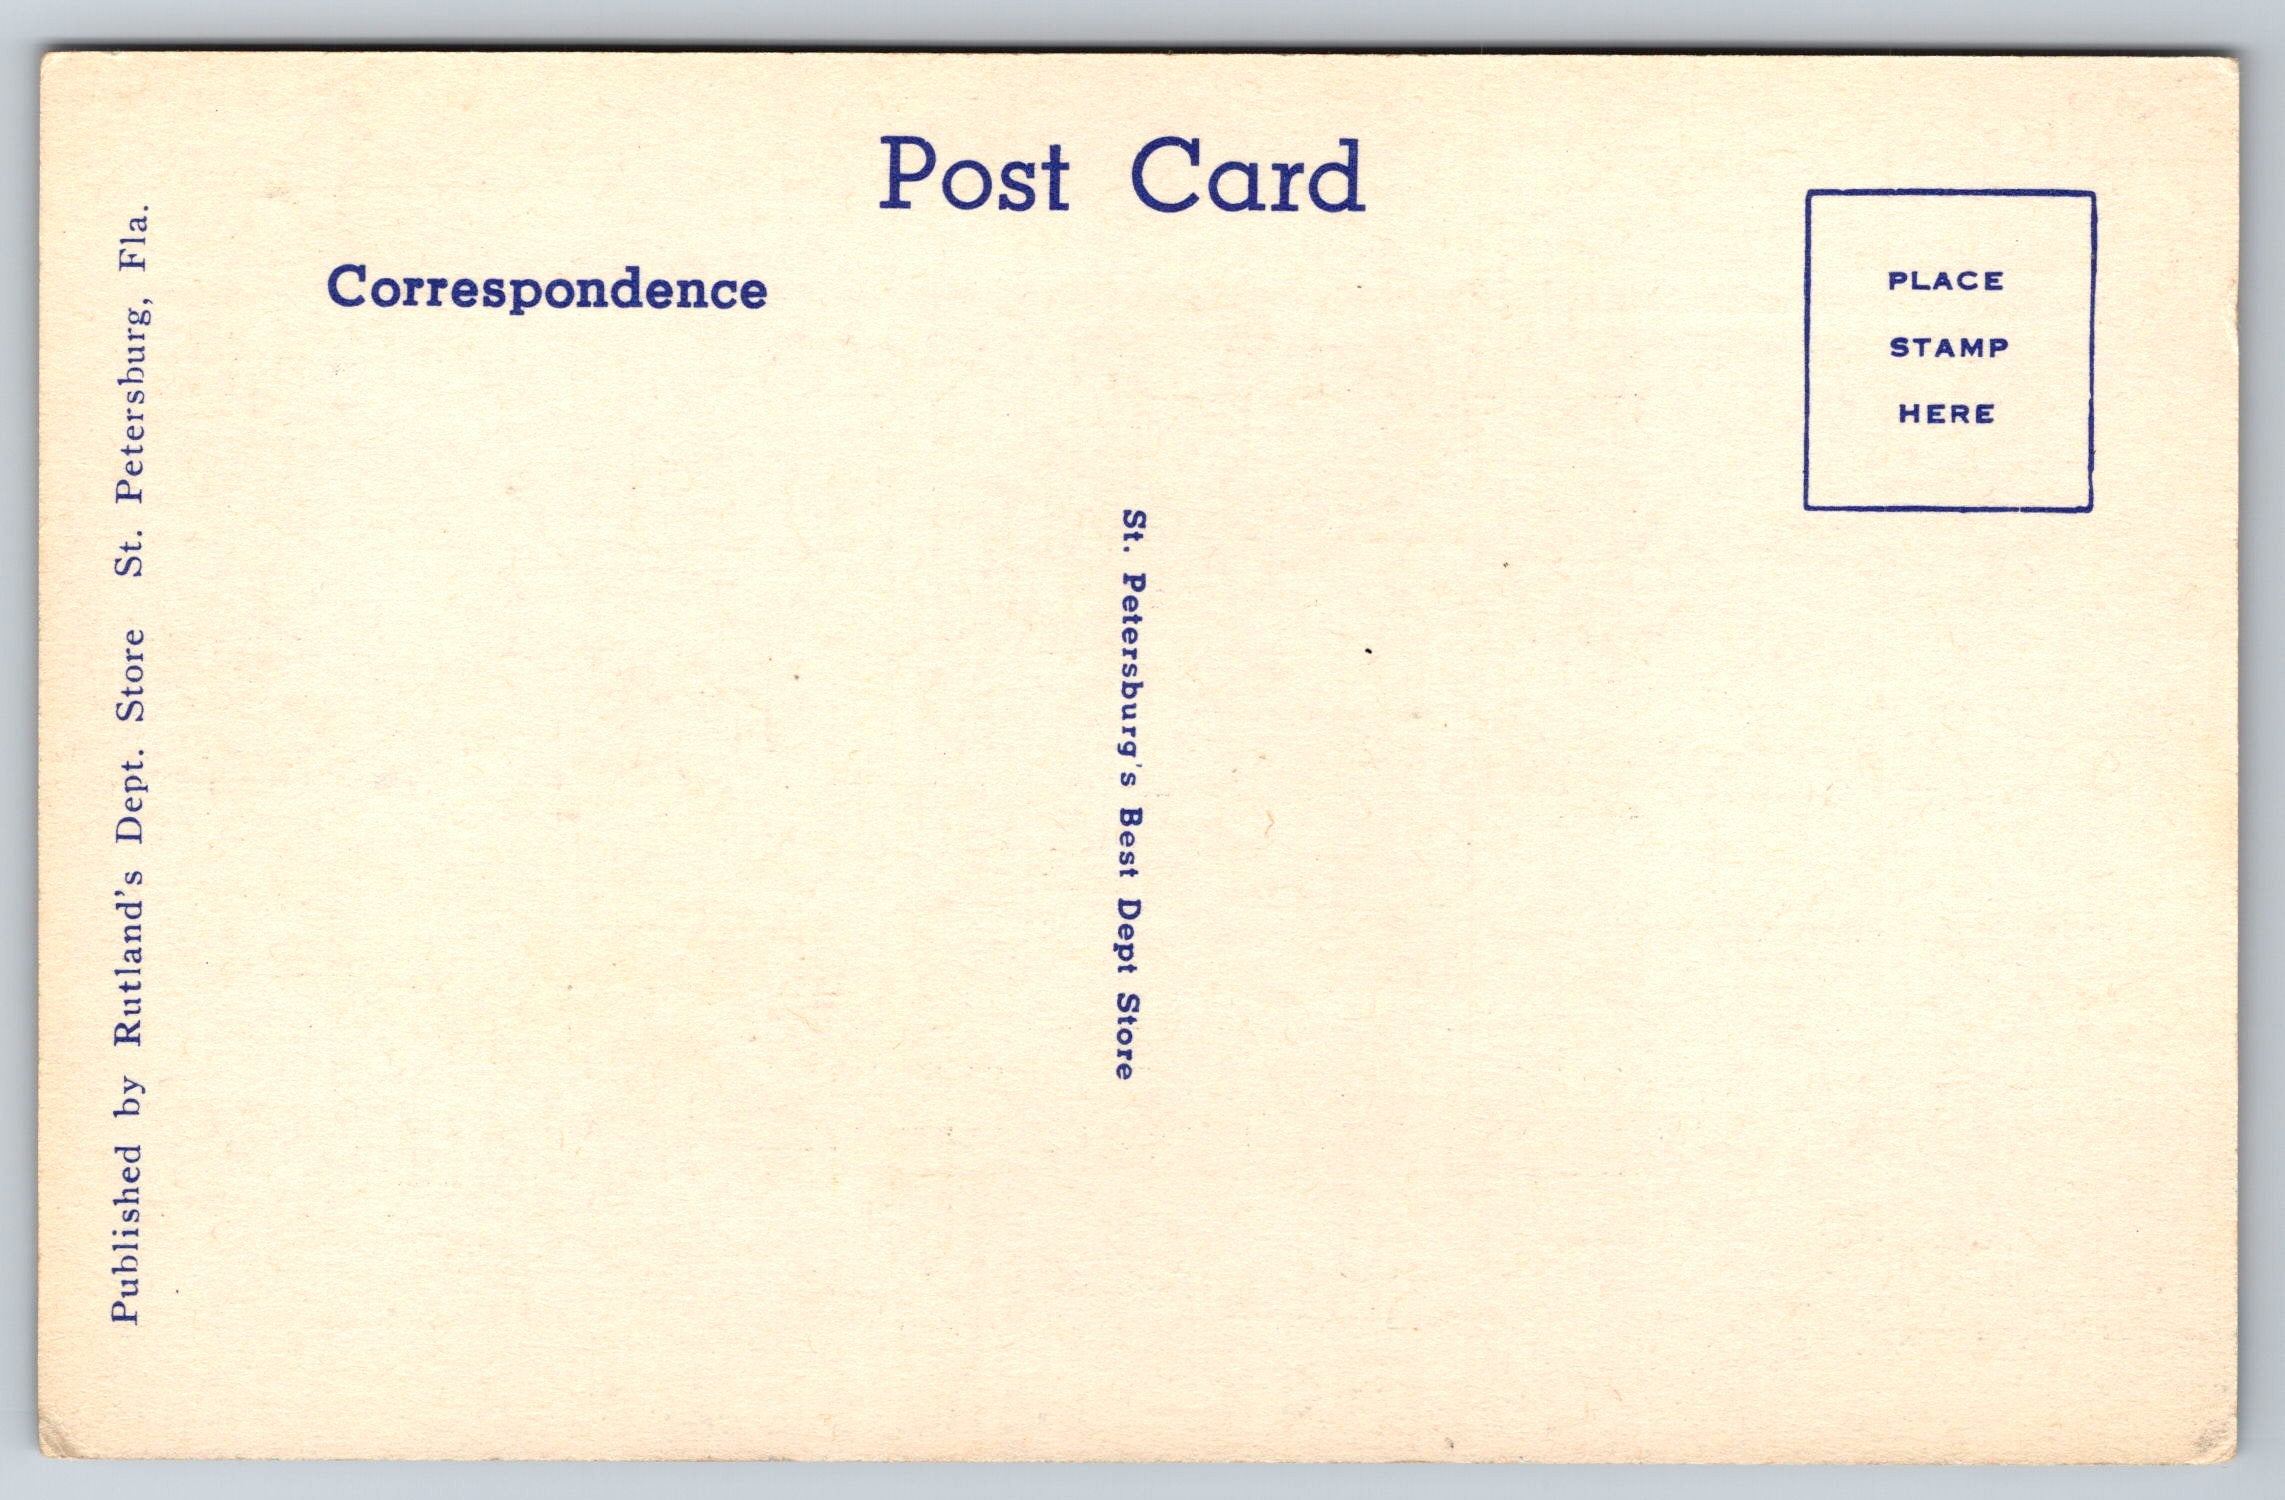 St. Petersburg, Florida, The Sunshine State, USA, Vintage Post Card